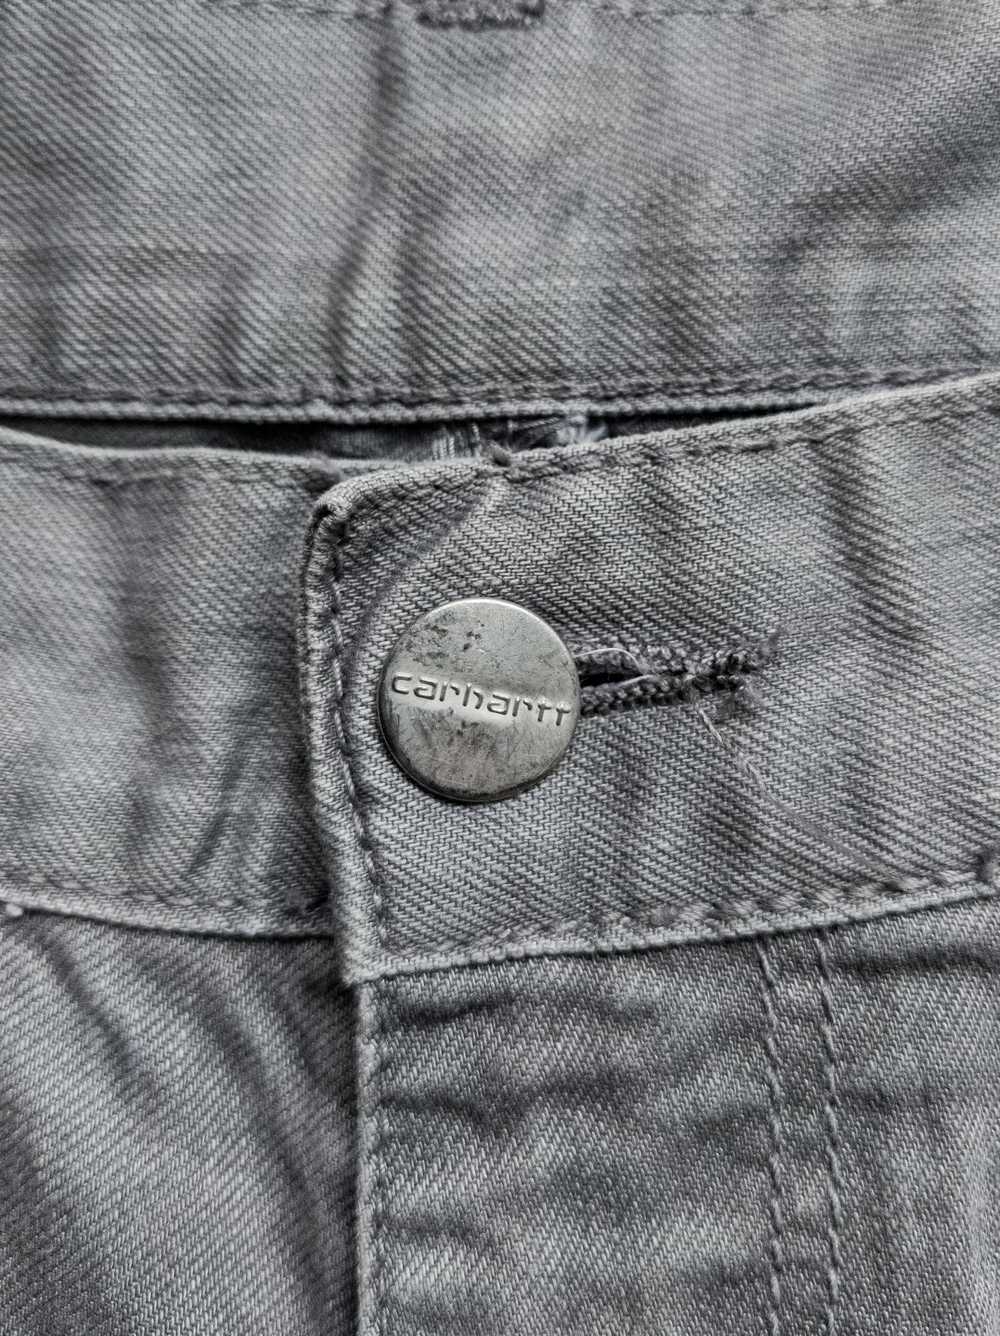 Carhartt × Vintage Carhartt Men's Jeans - image 3